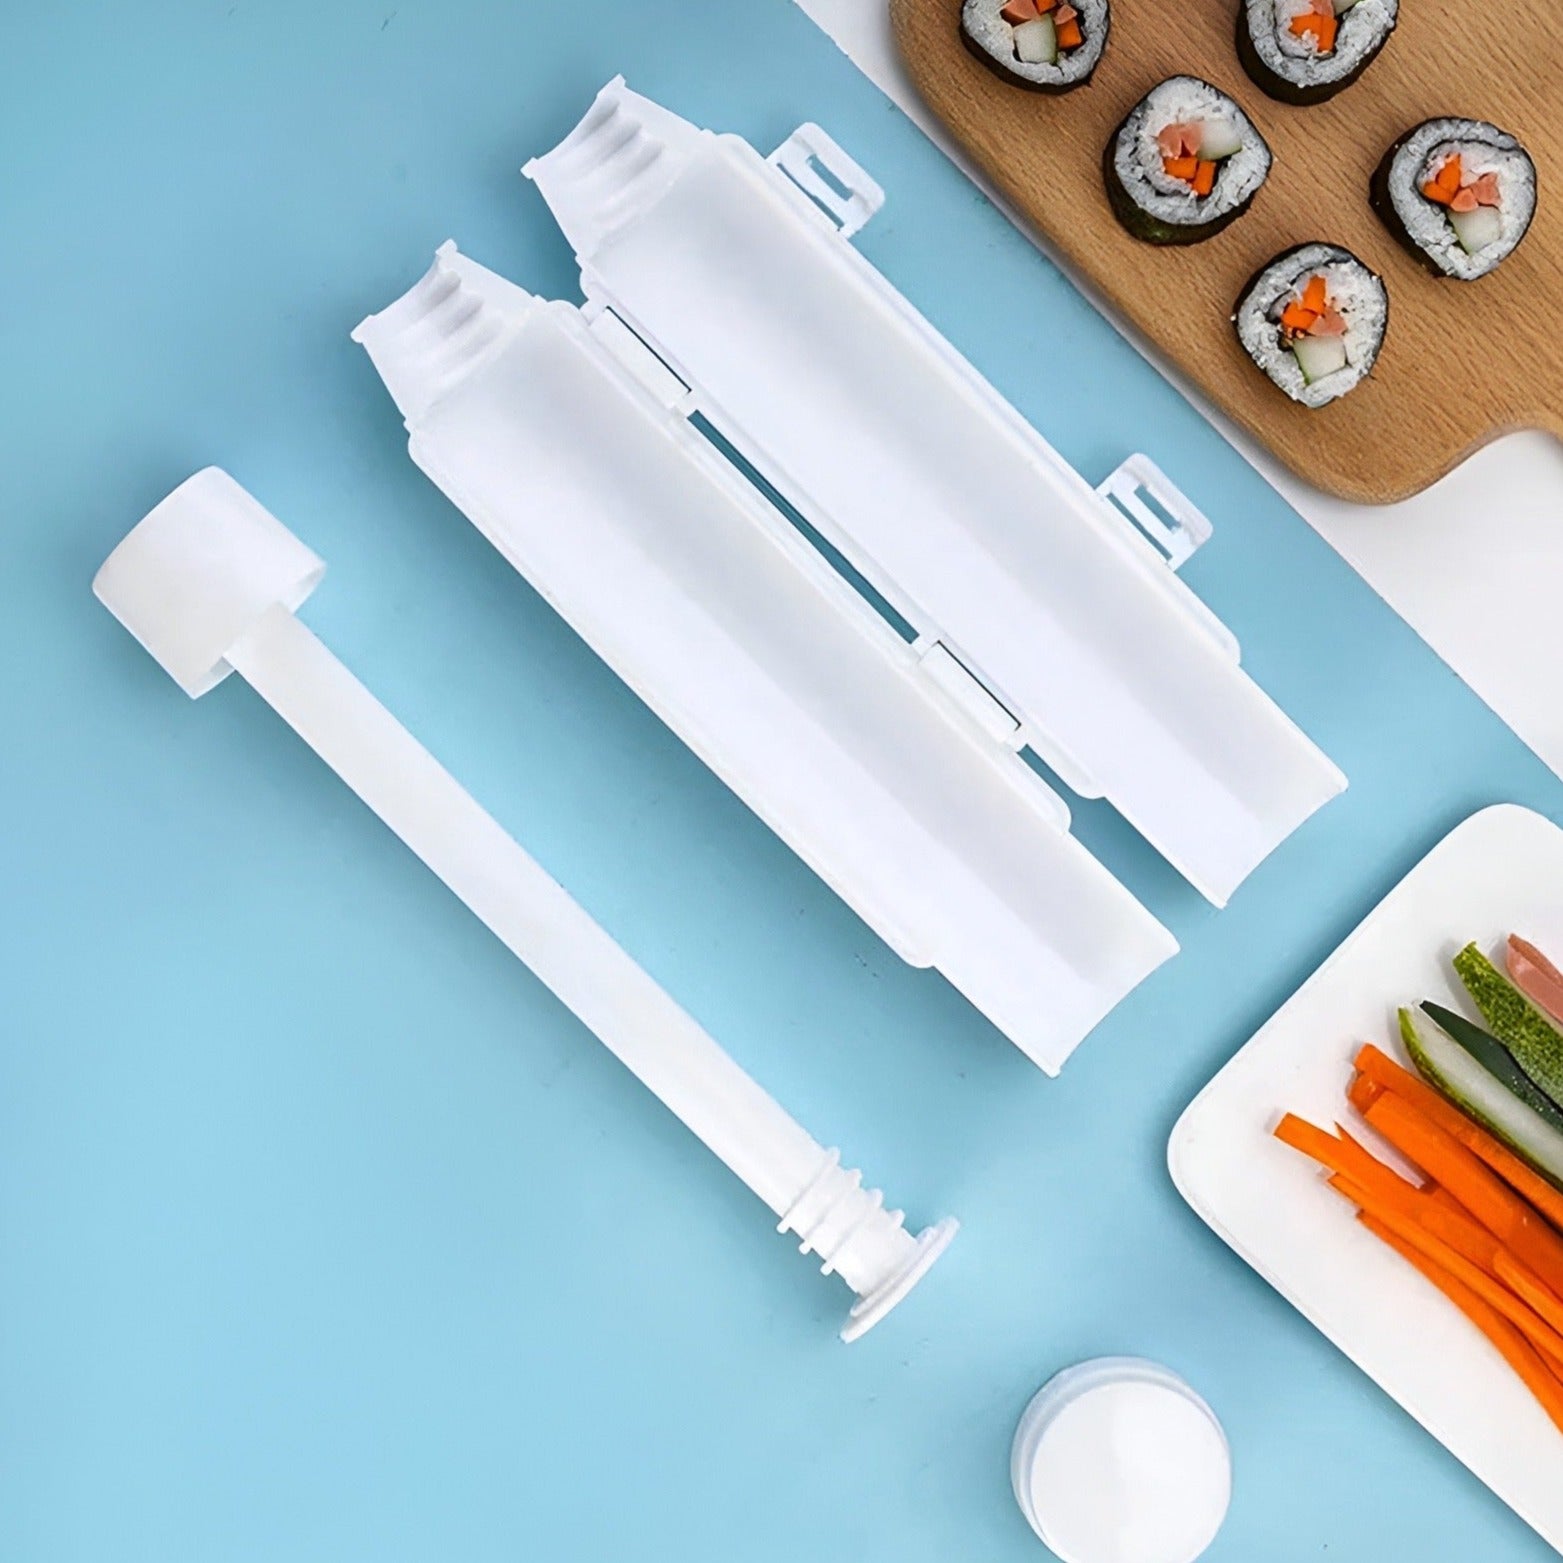 The Sushi Chef Kit